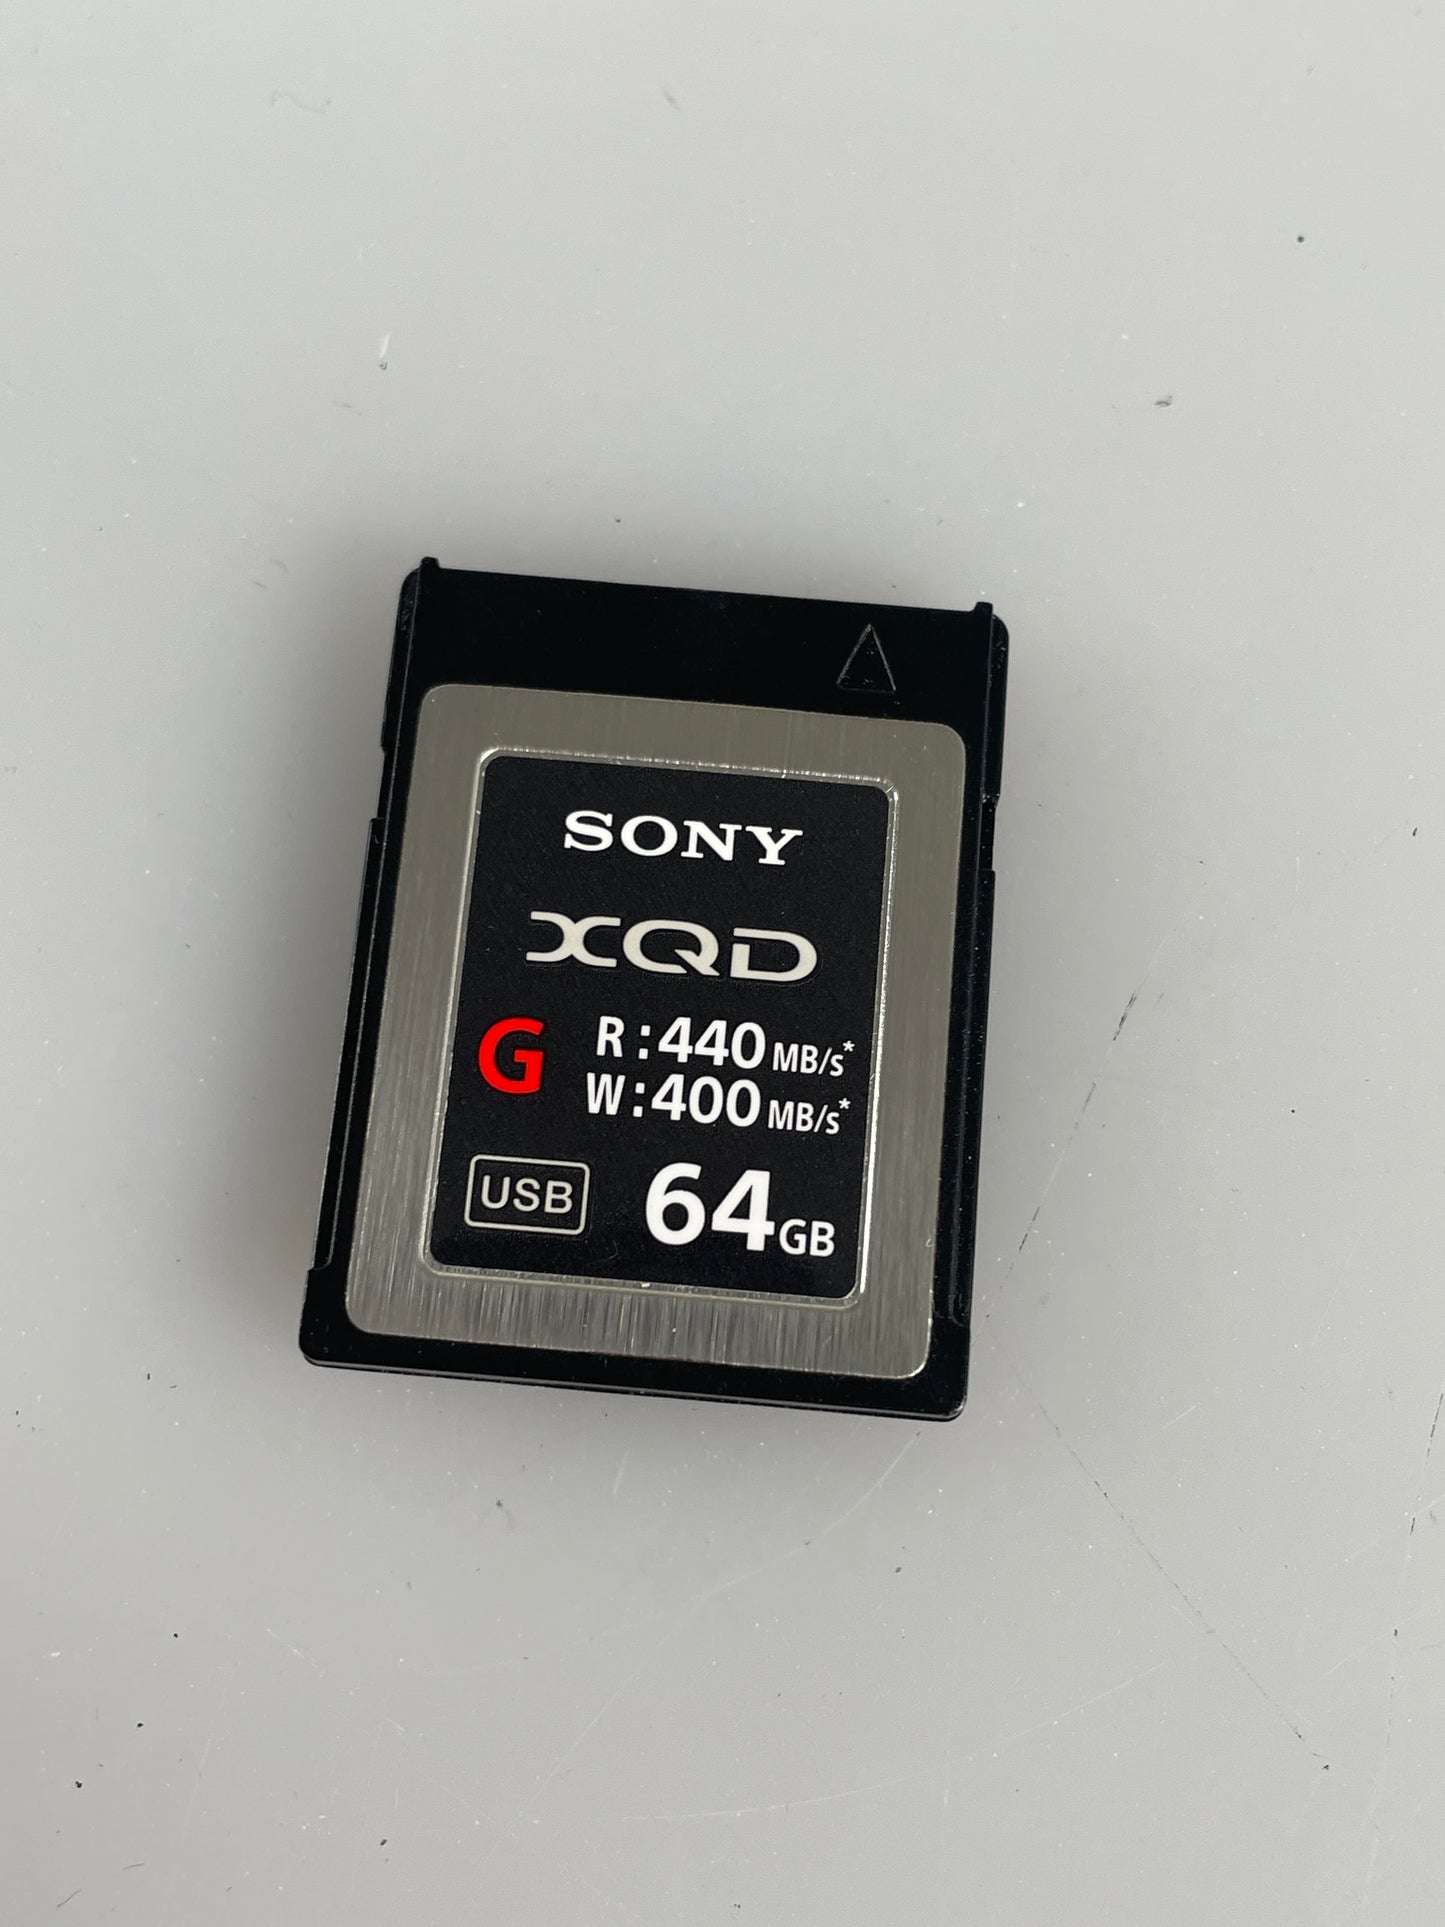 Sony 64GB G Series XQD G Memory Card 440 MB/s Read 400MB/s Write